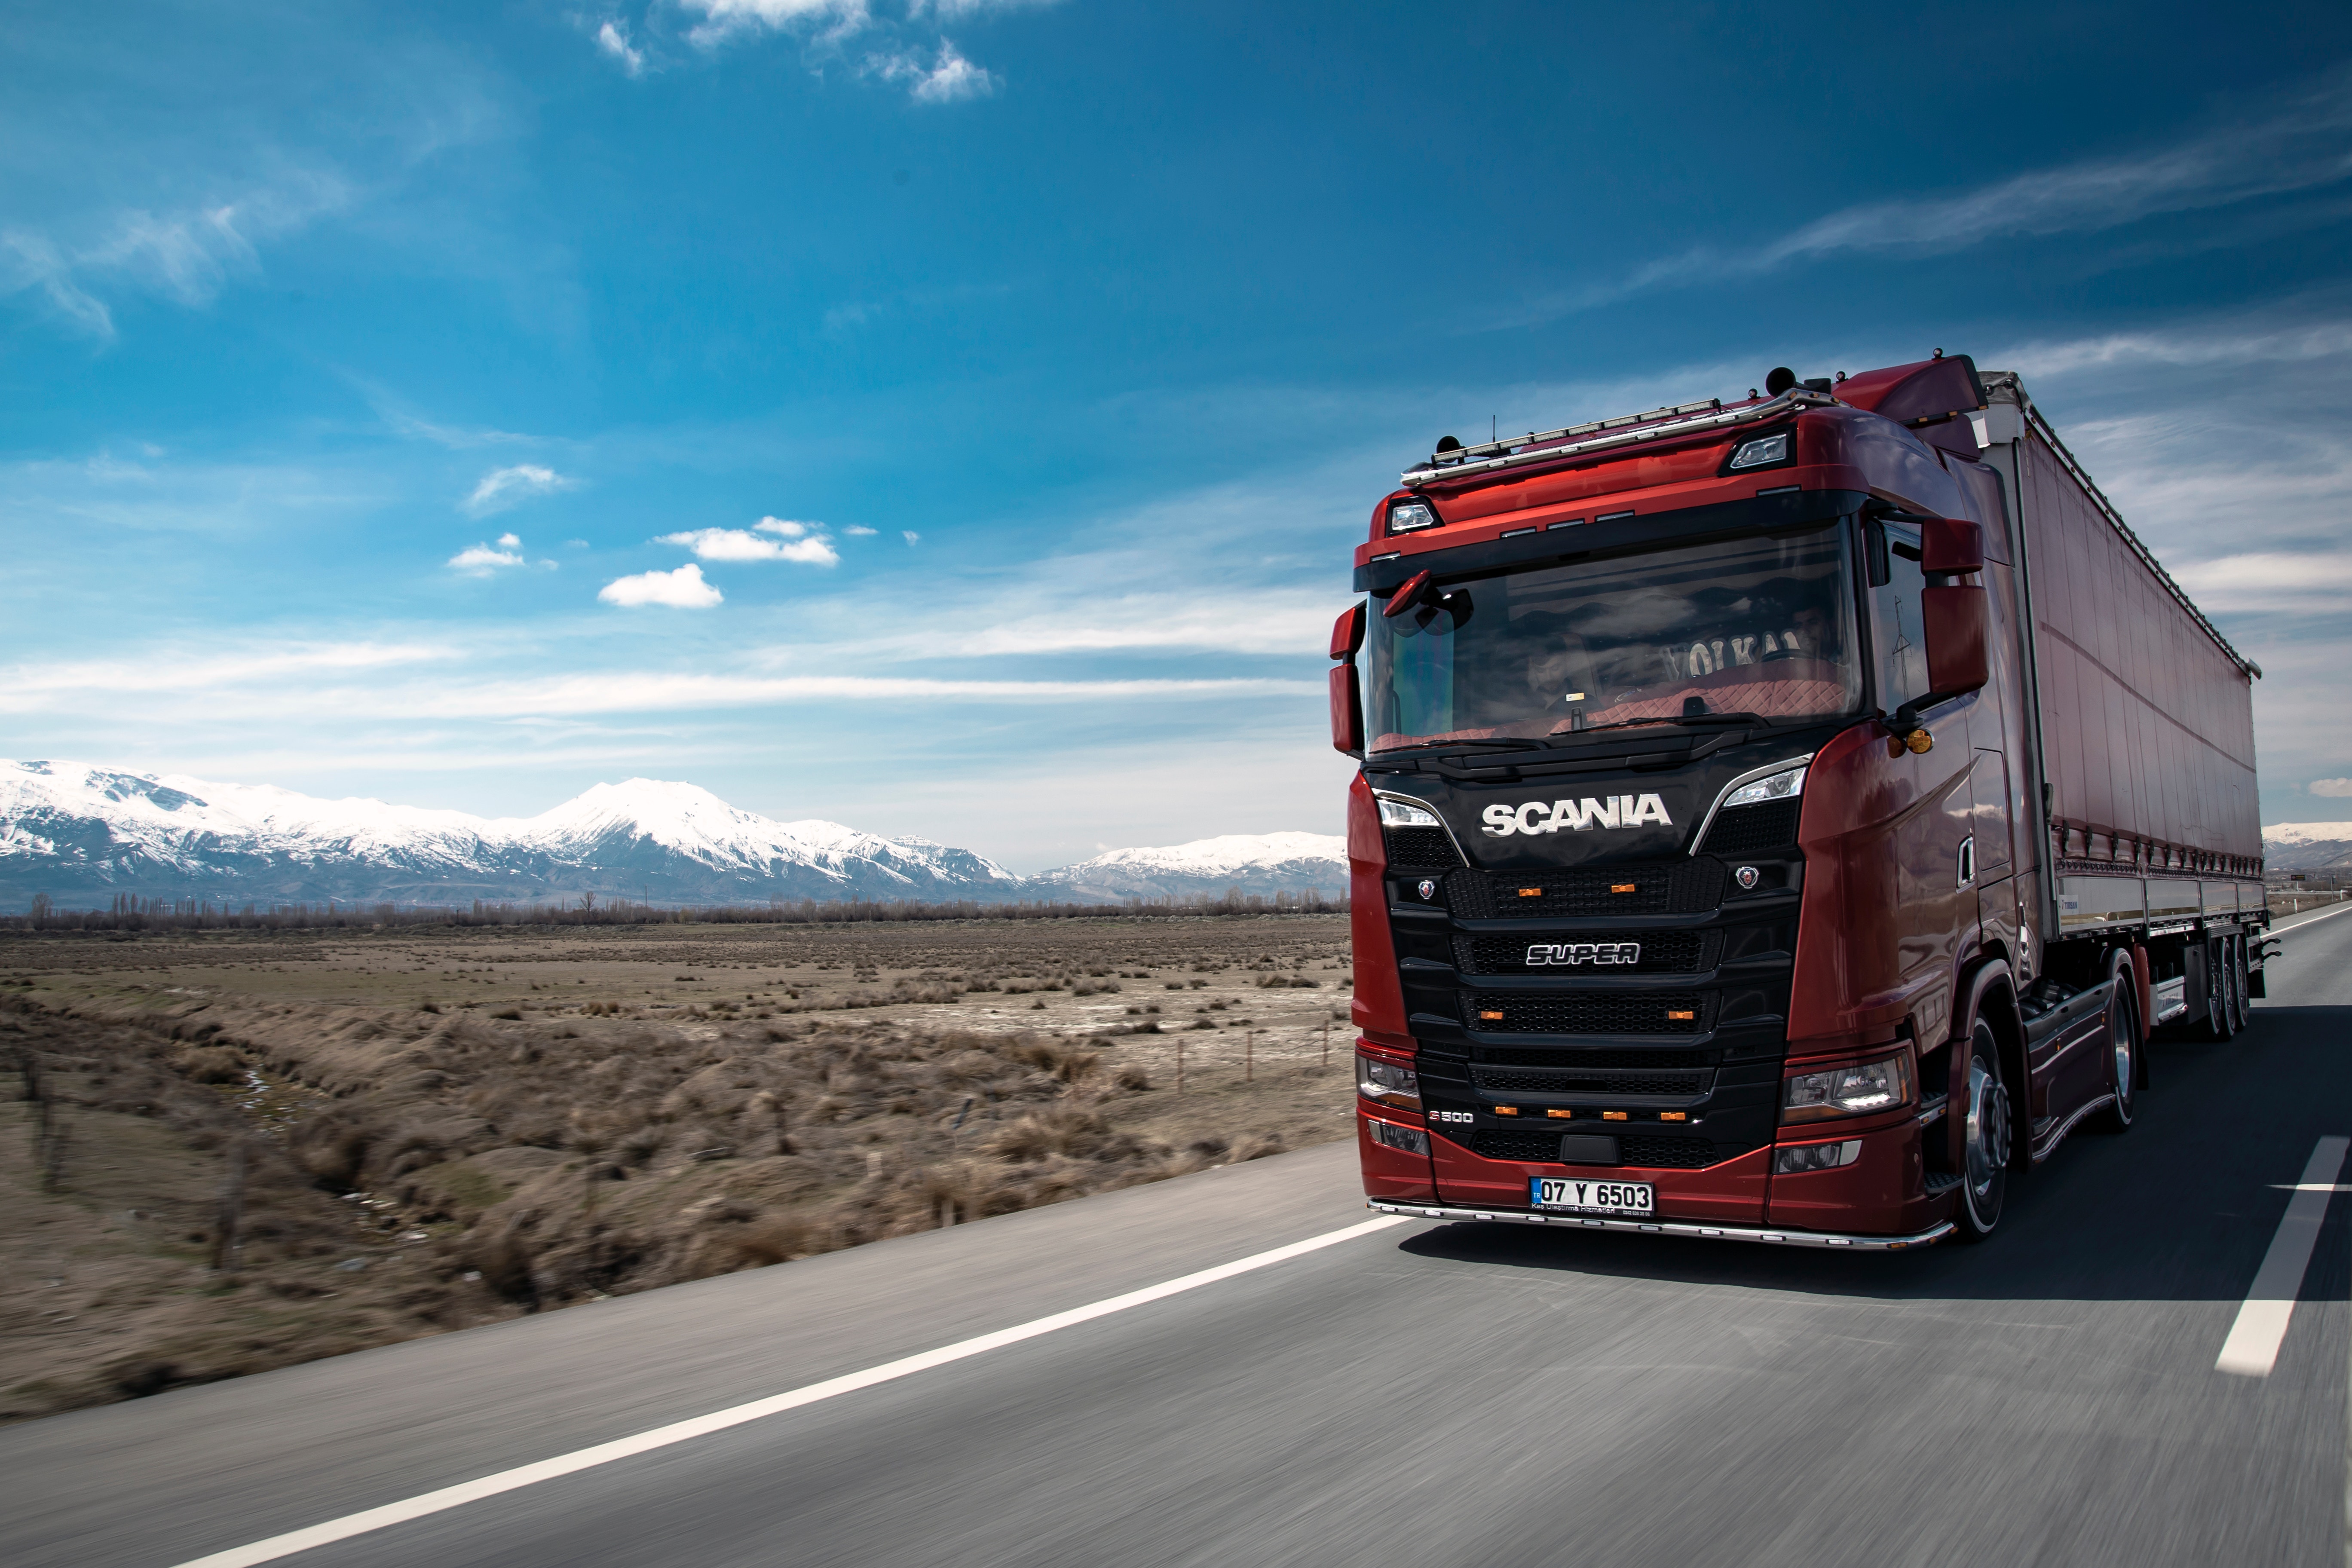 Keysight (KEYS) Solutions To Power Scania R&D Unit In Sweden